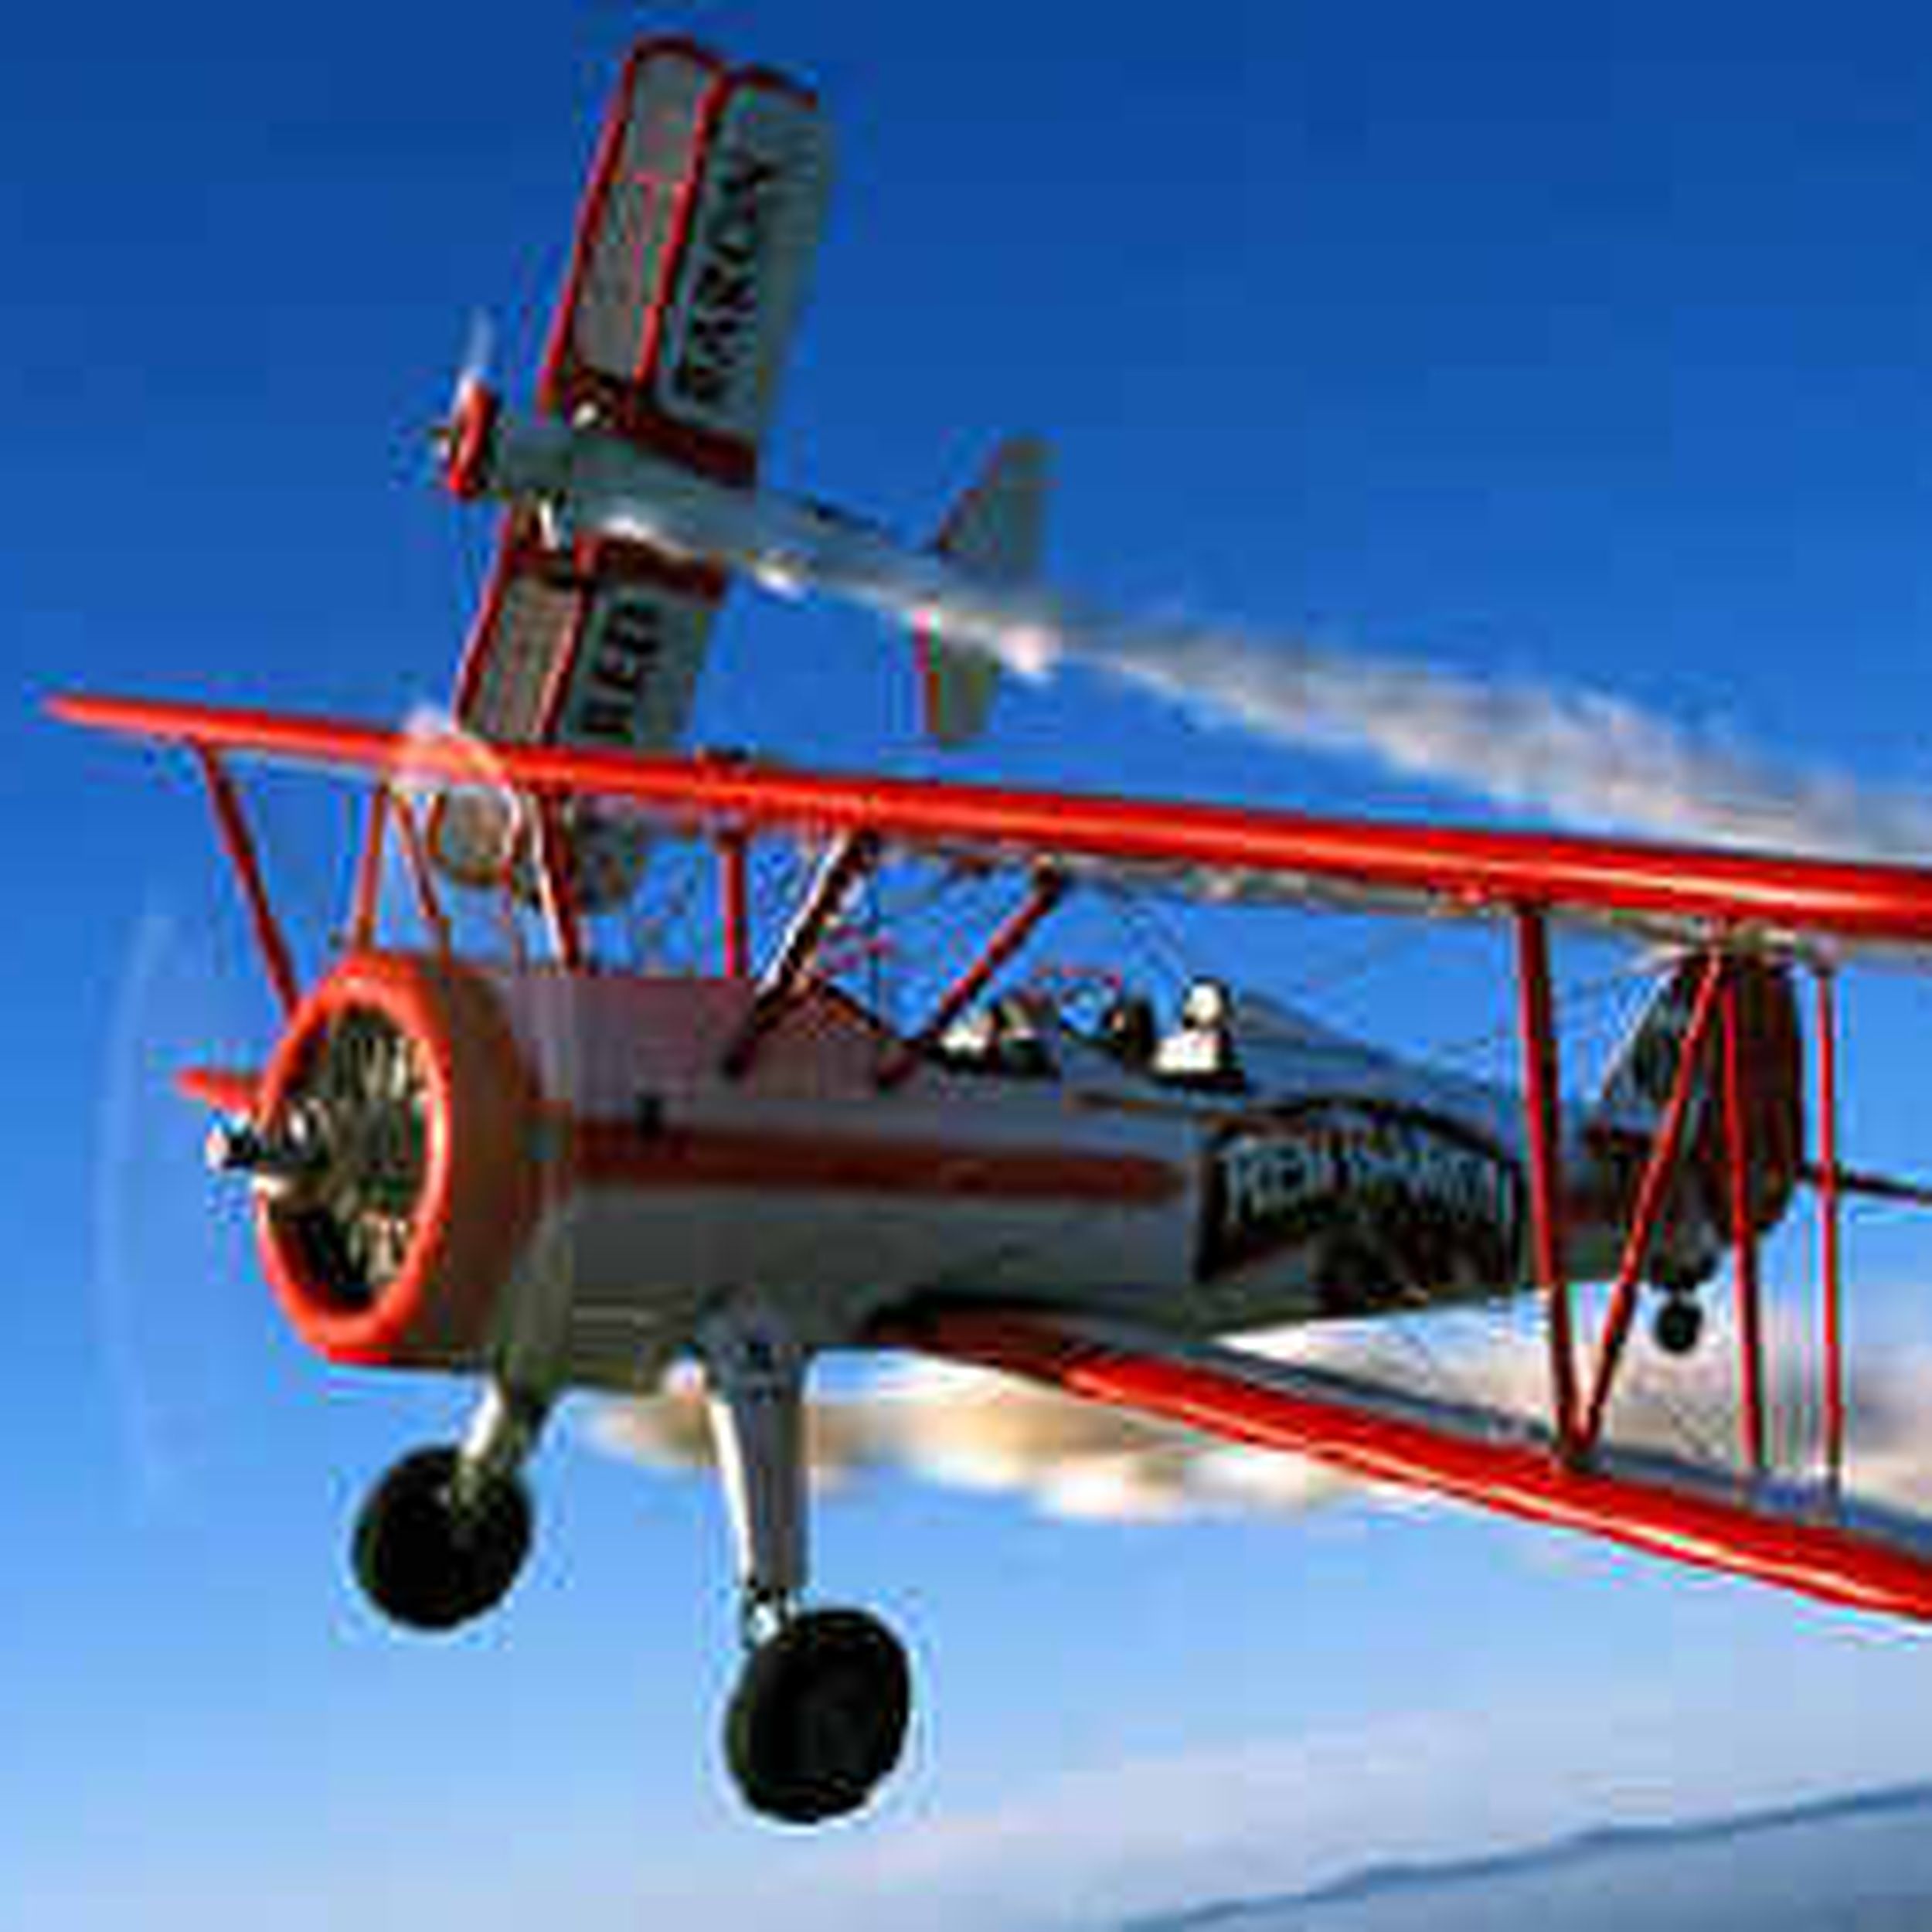 Red Baron pilots to perform aerobatics at Silverwood